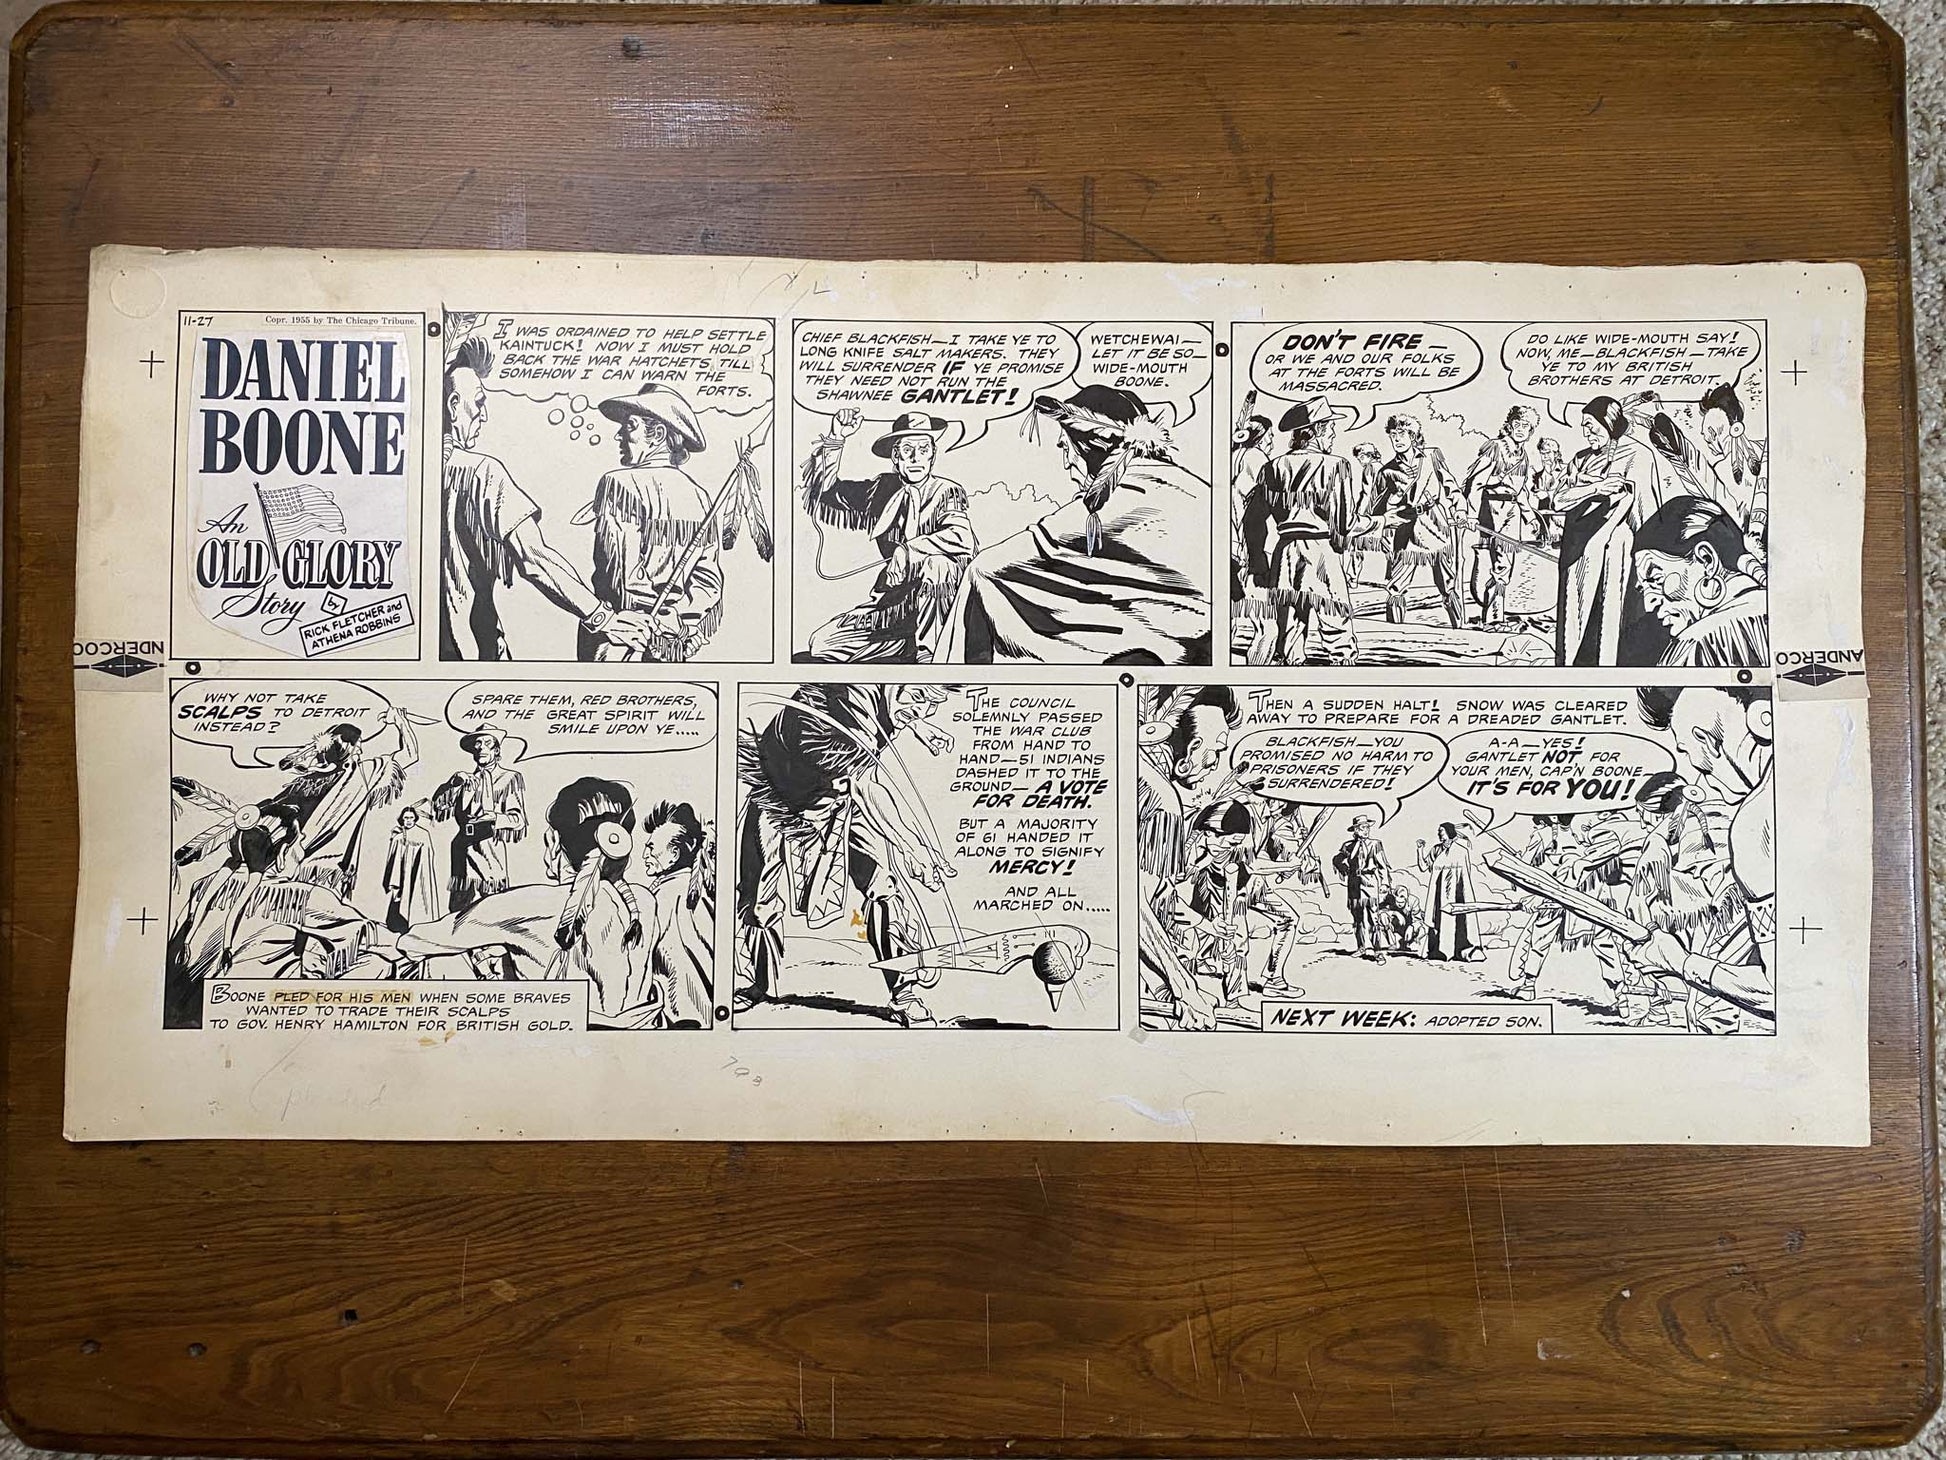 Daniel Boone: An Old Glory Story 11/27/55 Original Art Illustration | Fletcher Studio